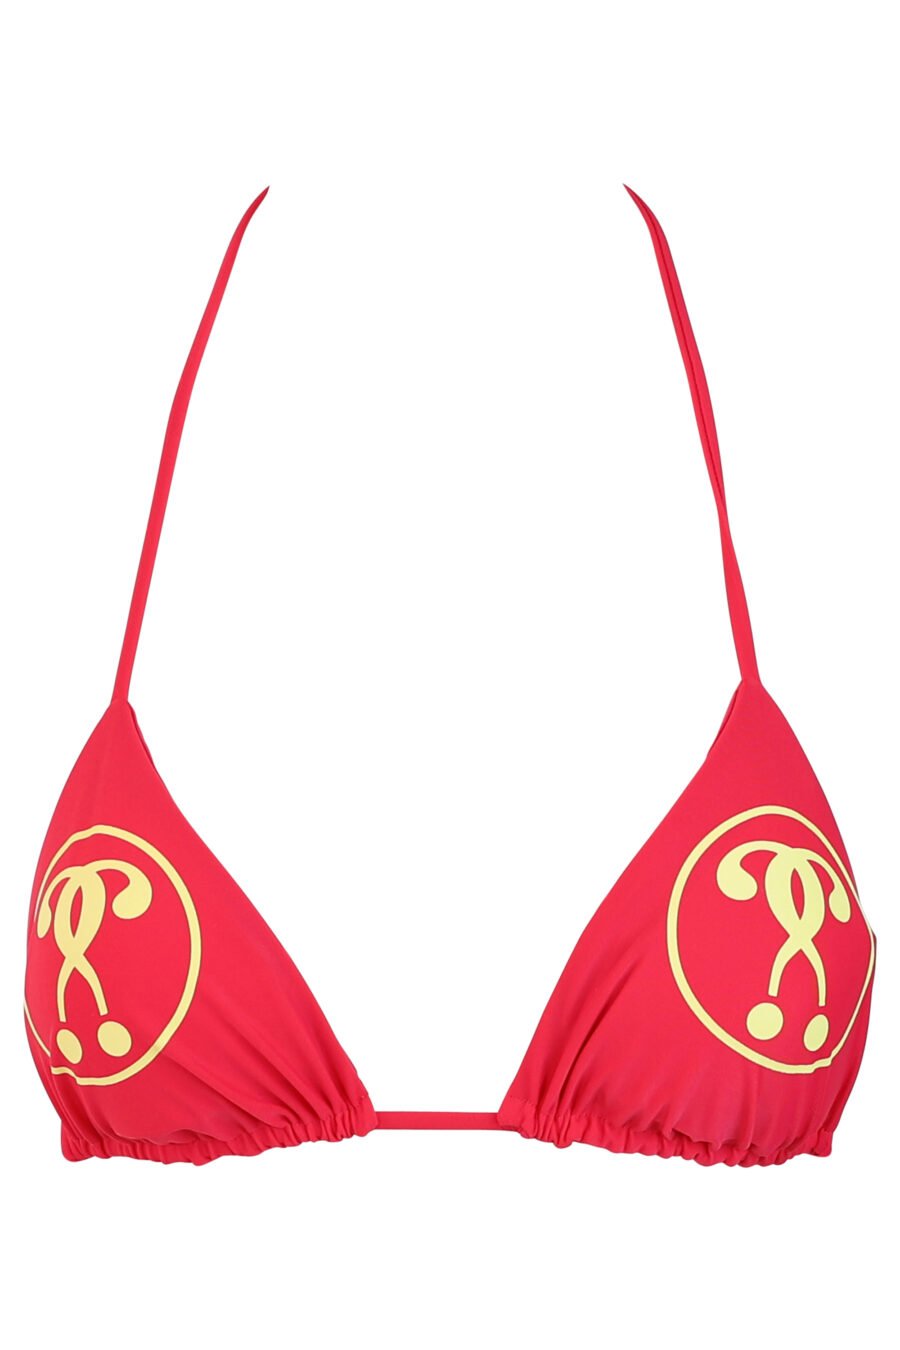 Fuchsia bikini top with yellow double question logo - IMG 0678